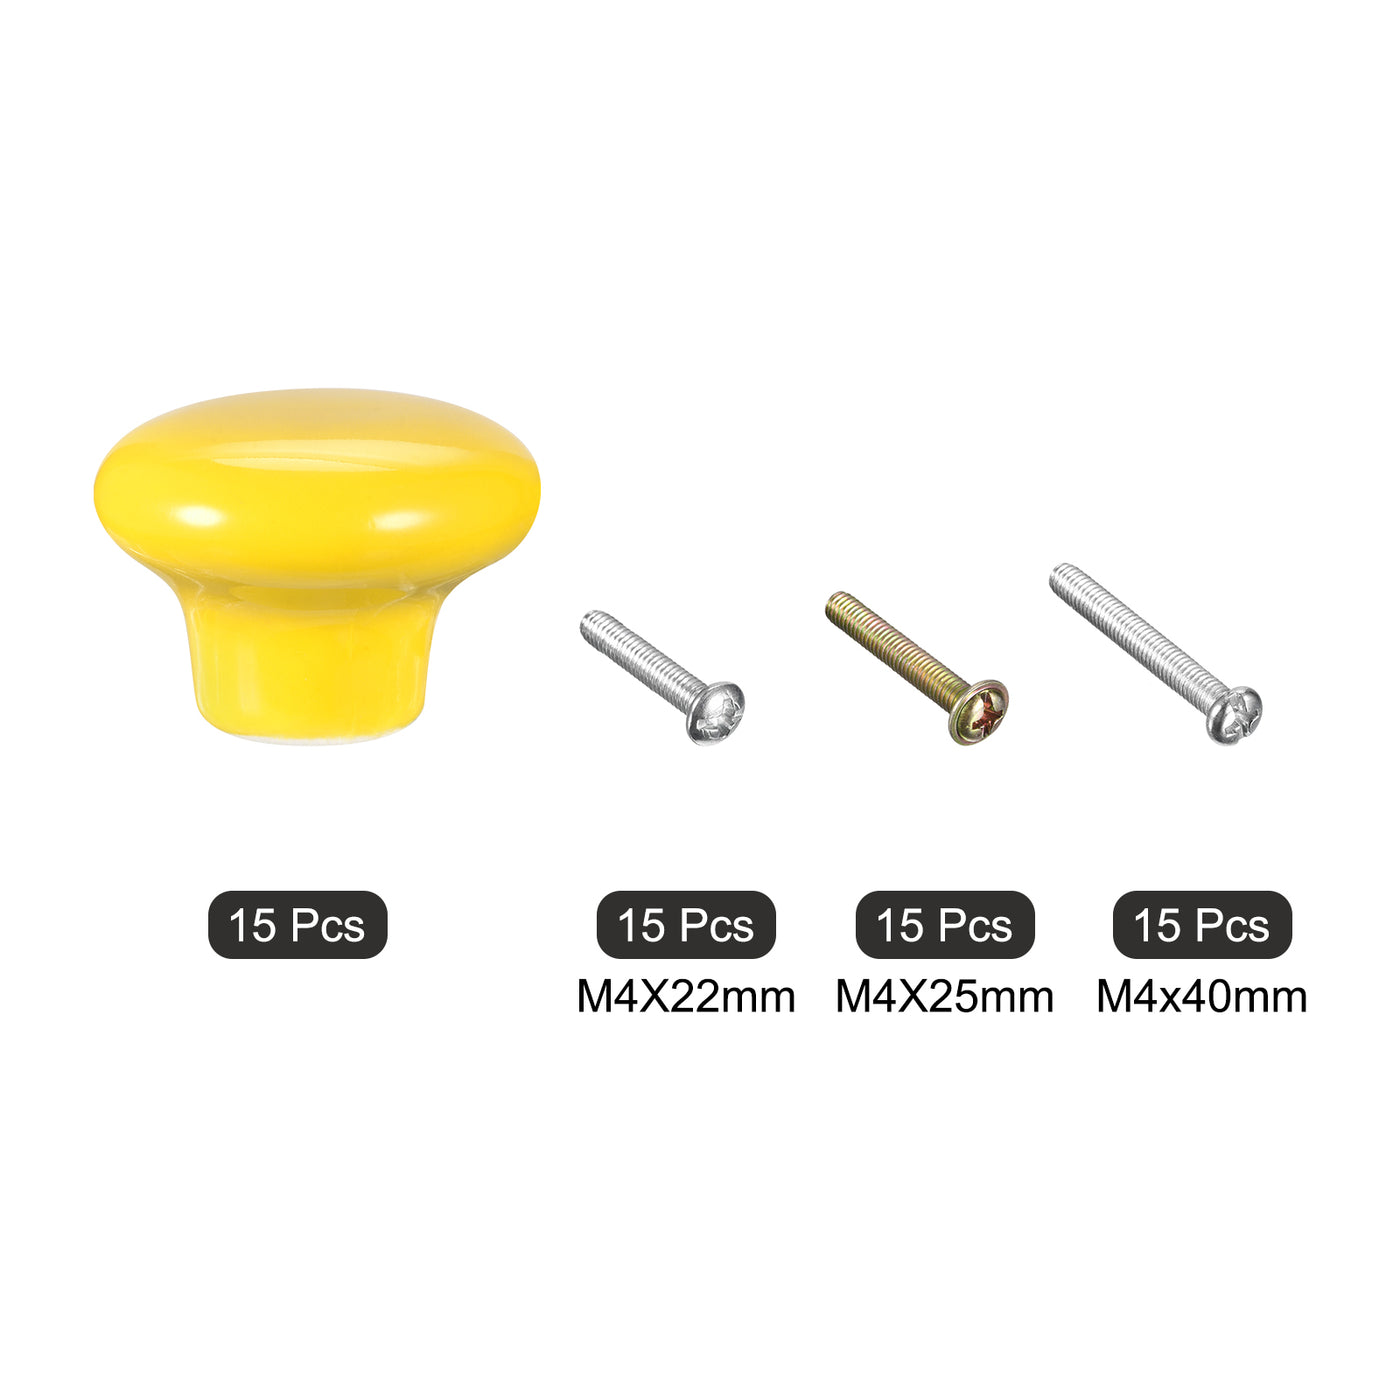 uxcell Uxcell Ceramic Drawer Knobs 15pcs Mushroom Shape Pulls 0.94"x1.26" for Dresser(Yellow)